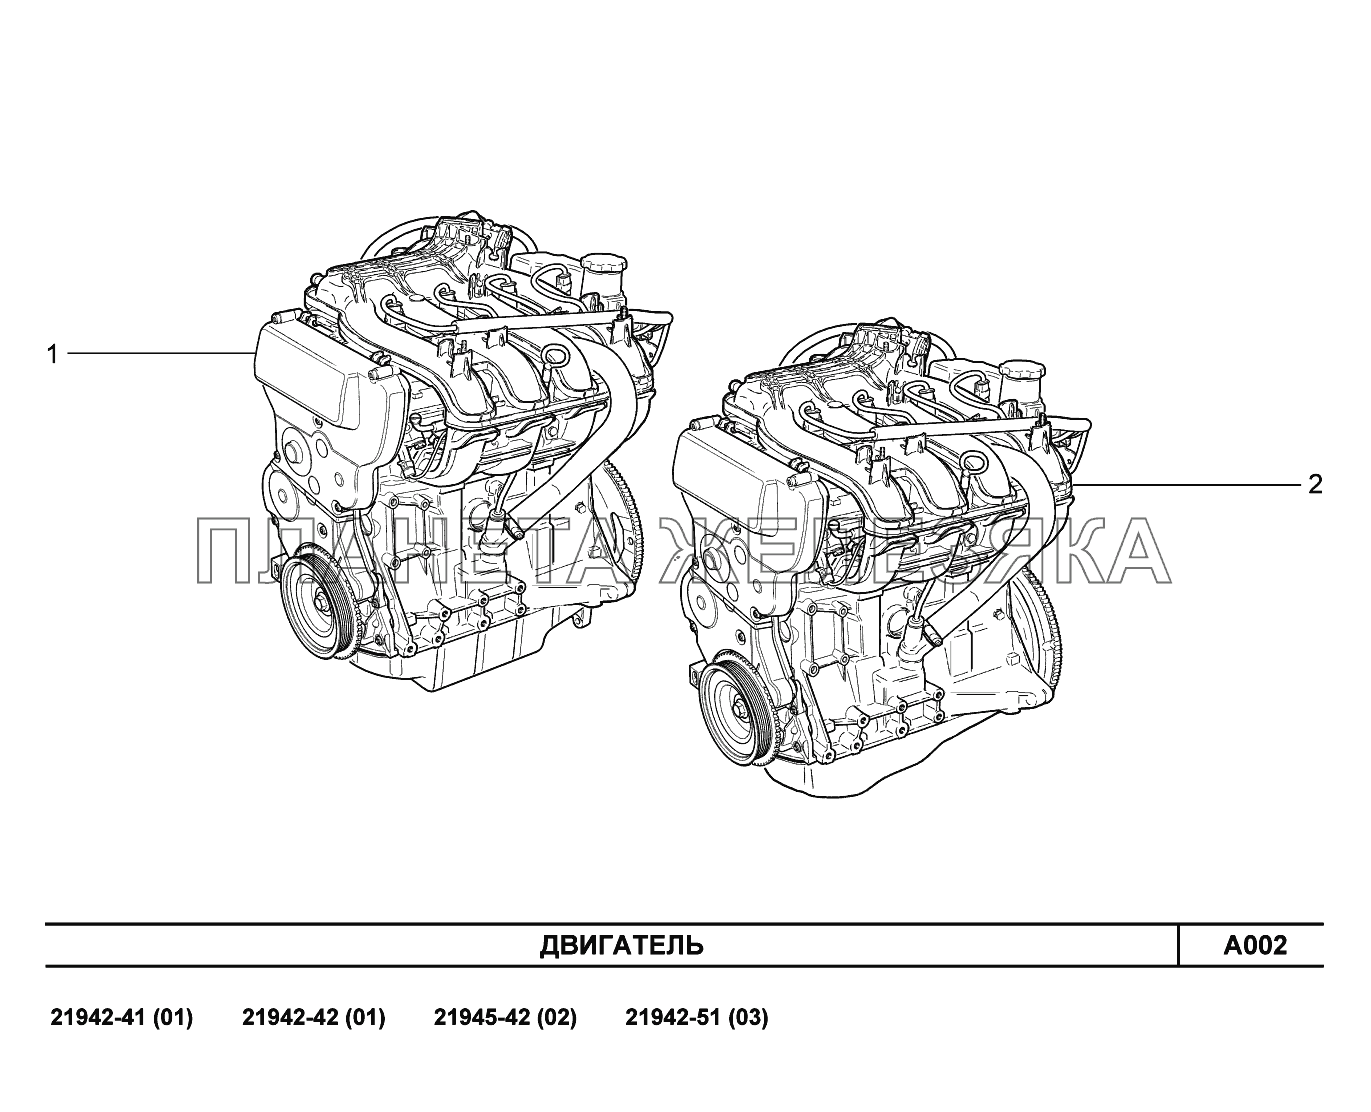 A002. Двигатель Lada Kalina New 2194